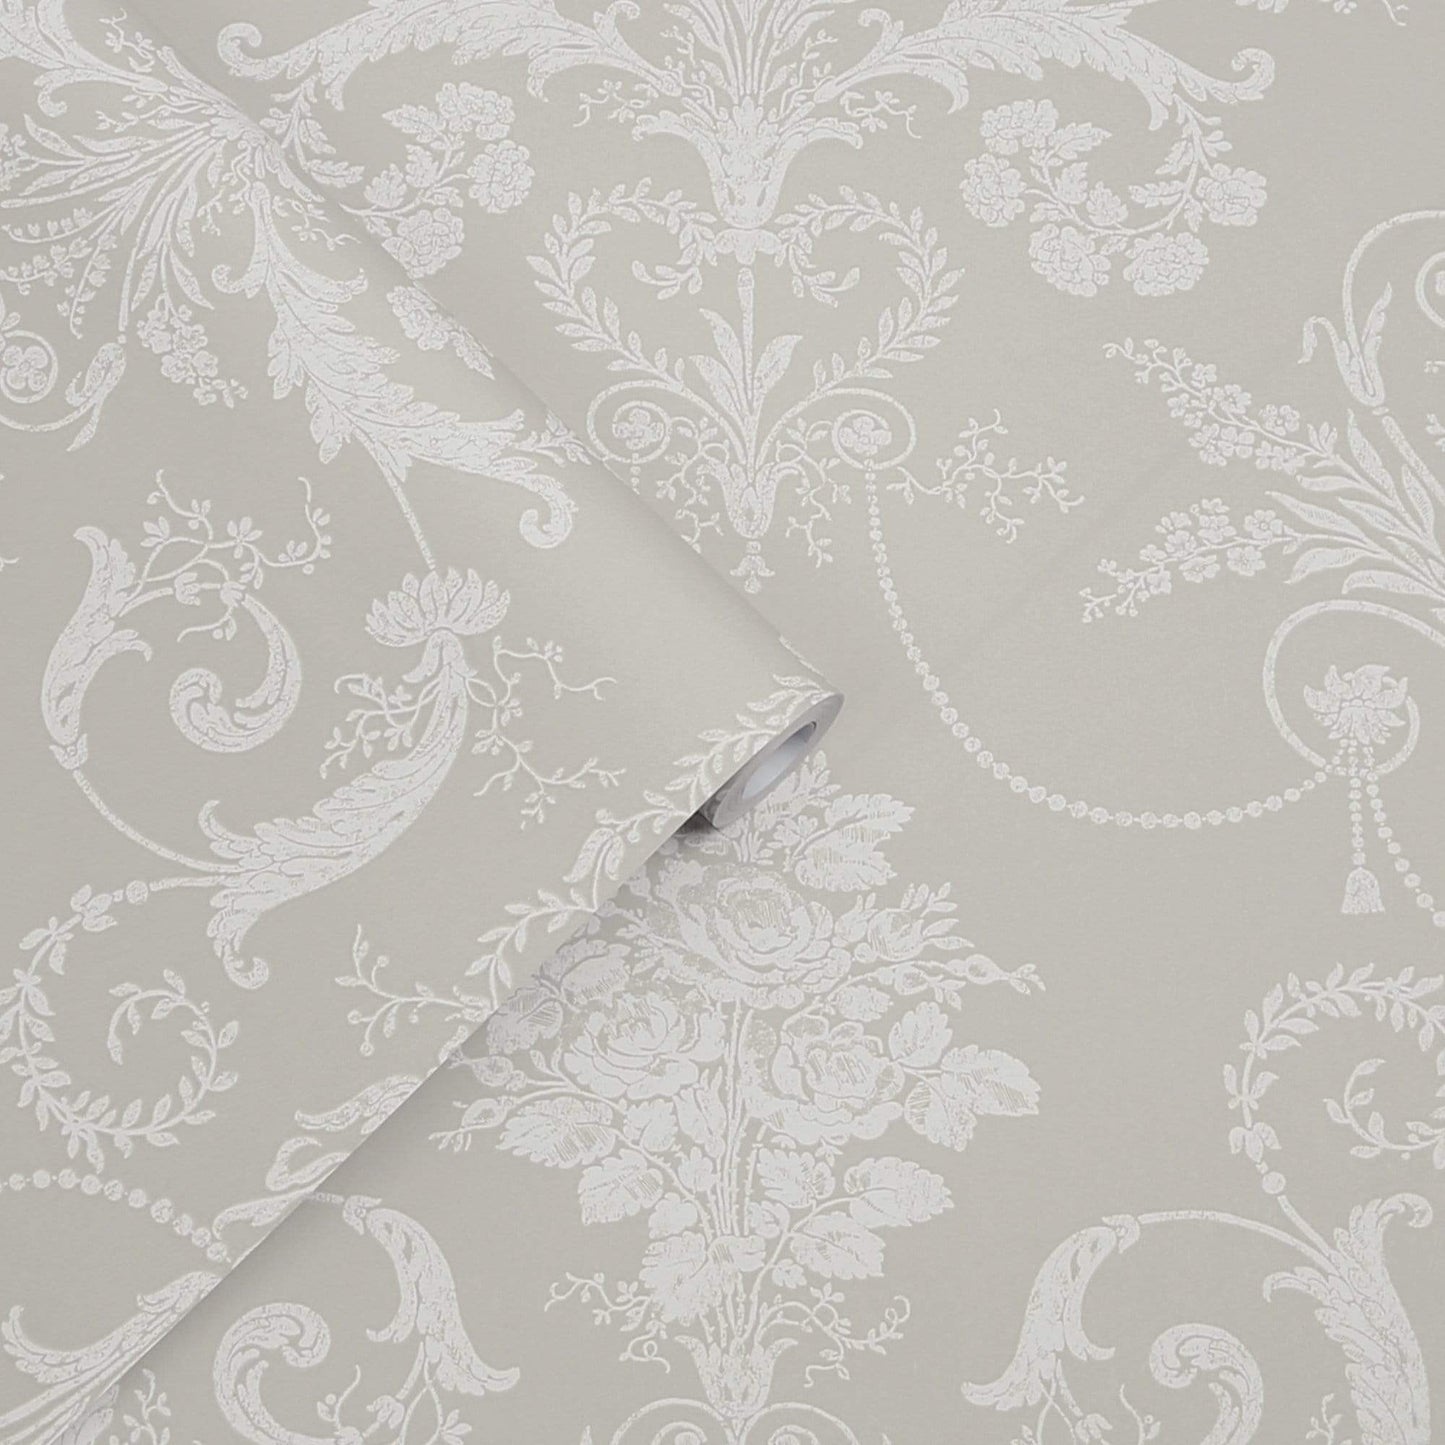 Wallpaper  -  Laura Ashley Josette White & Dove Grey Wallpaper - 113378  -  60001910